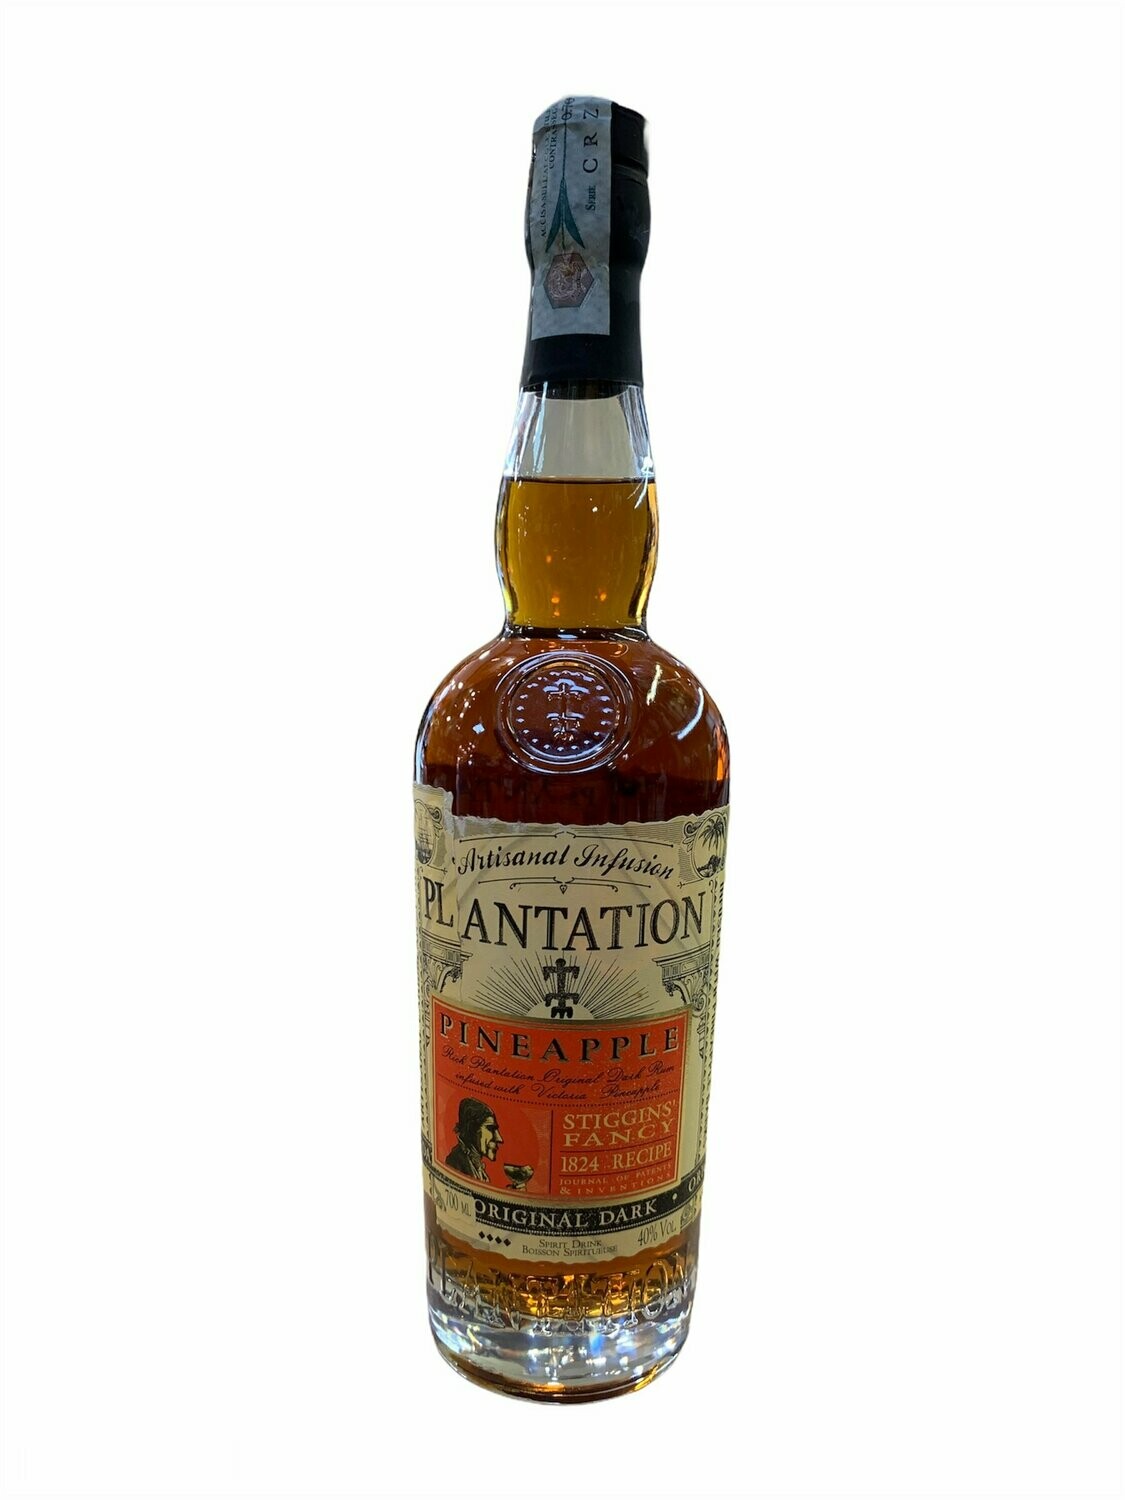 Plantation Rum Original Dark "Pineapple" 70cl 40%